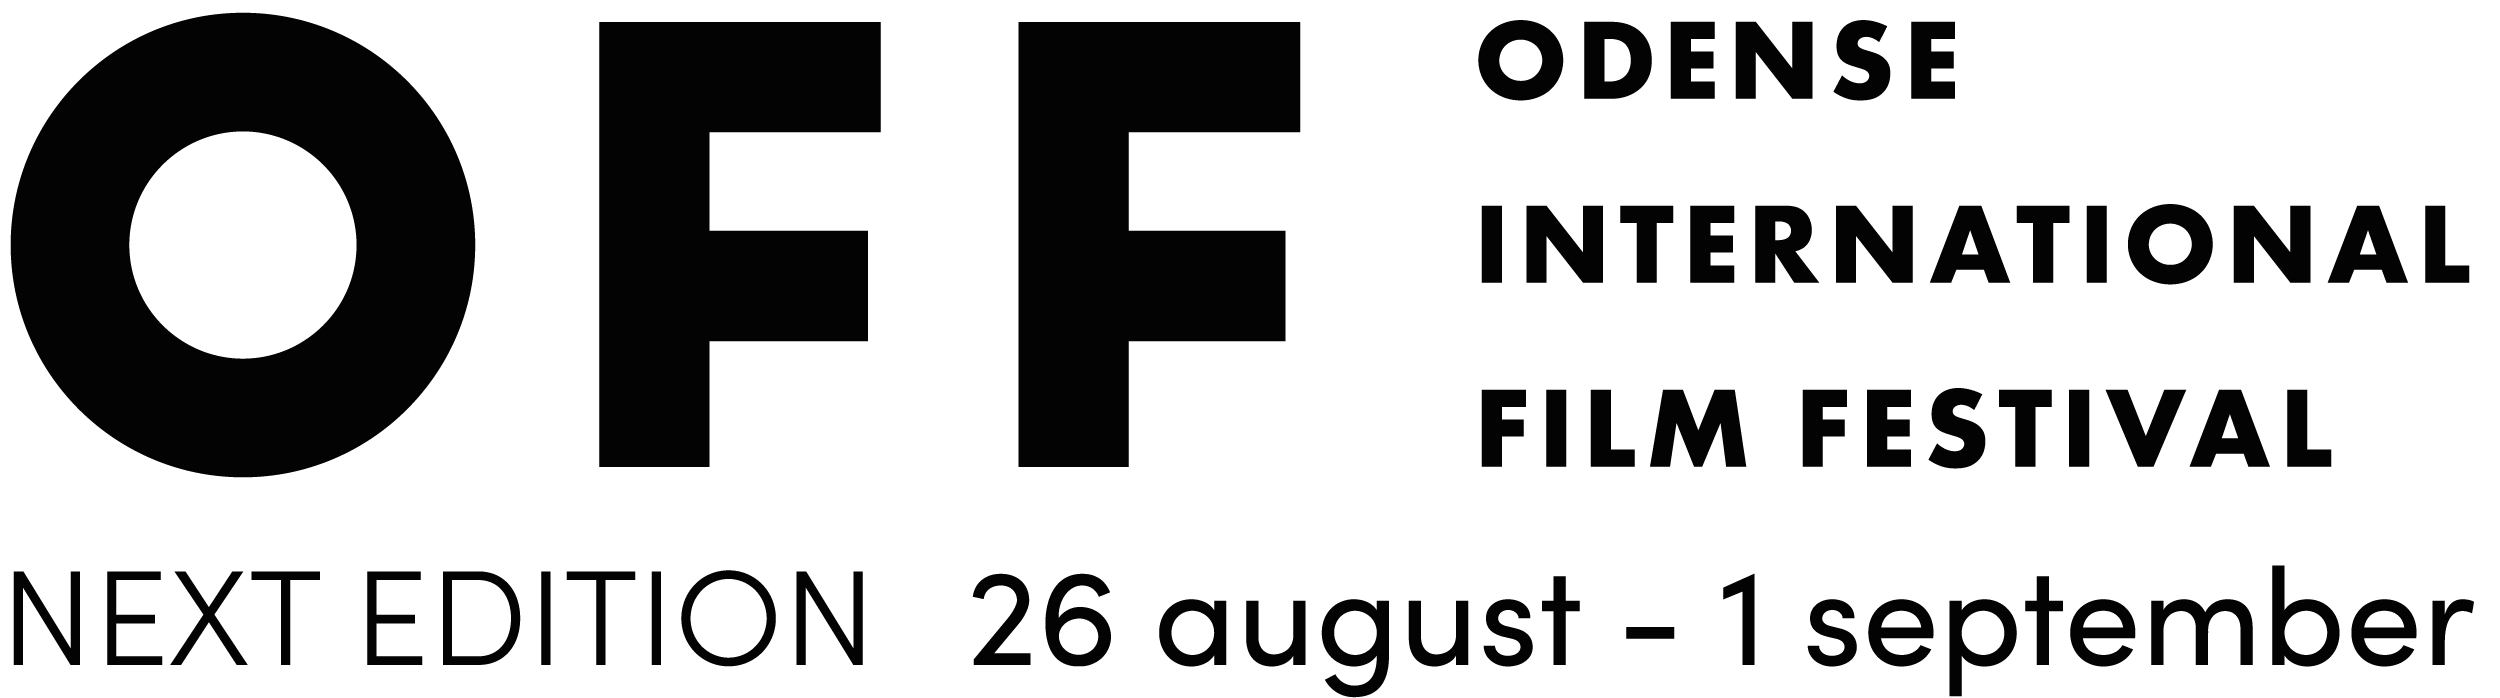 Odense International Film Festival